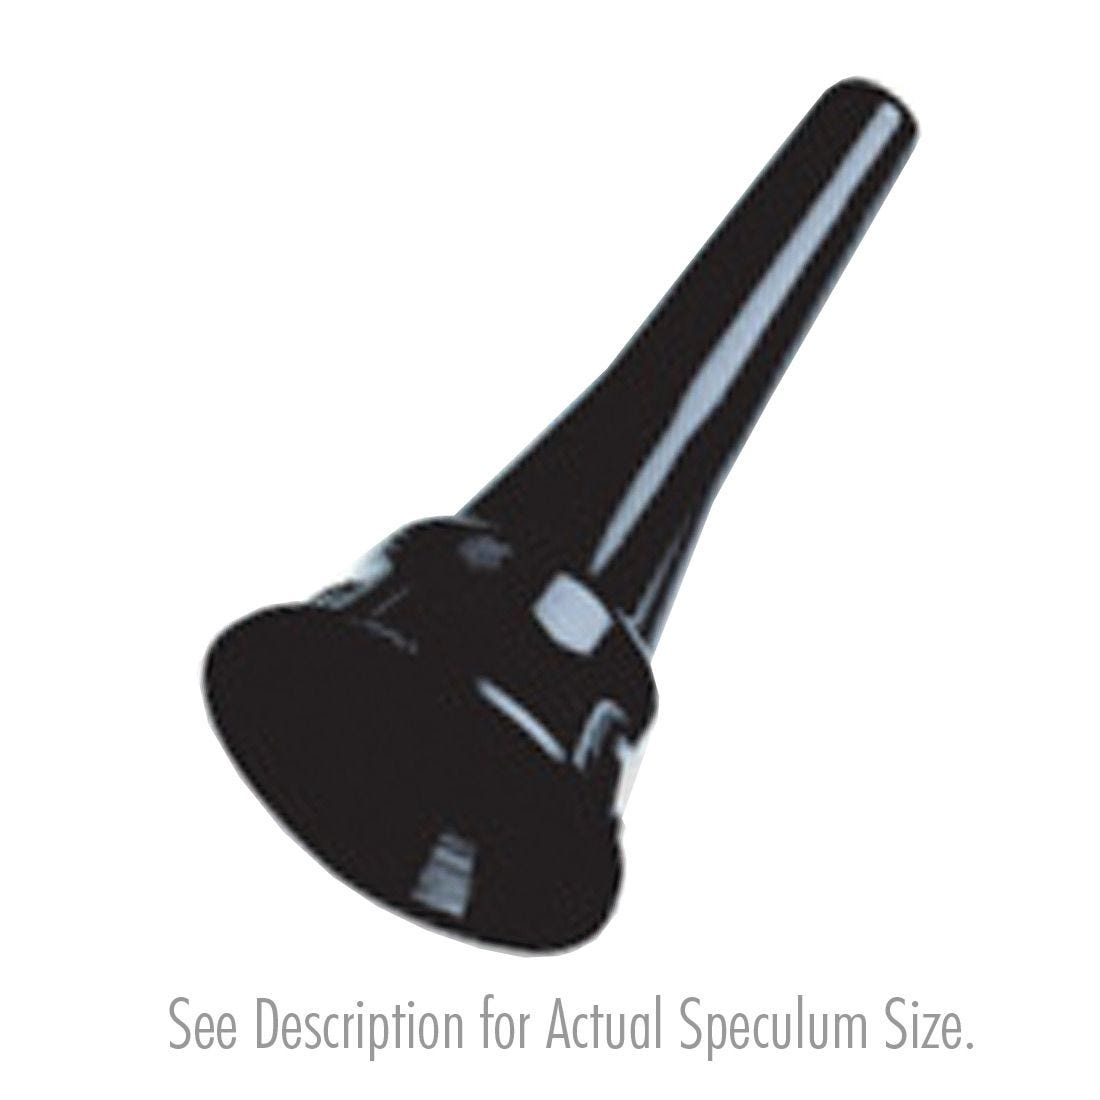 Otoscope Specula for 3.5v and 2.5v Otoscopes - 4mm Speculum Tip